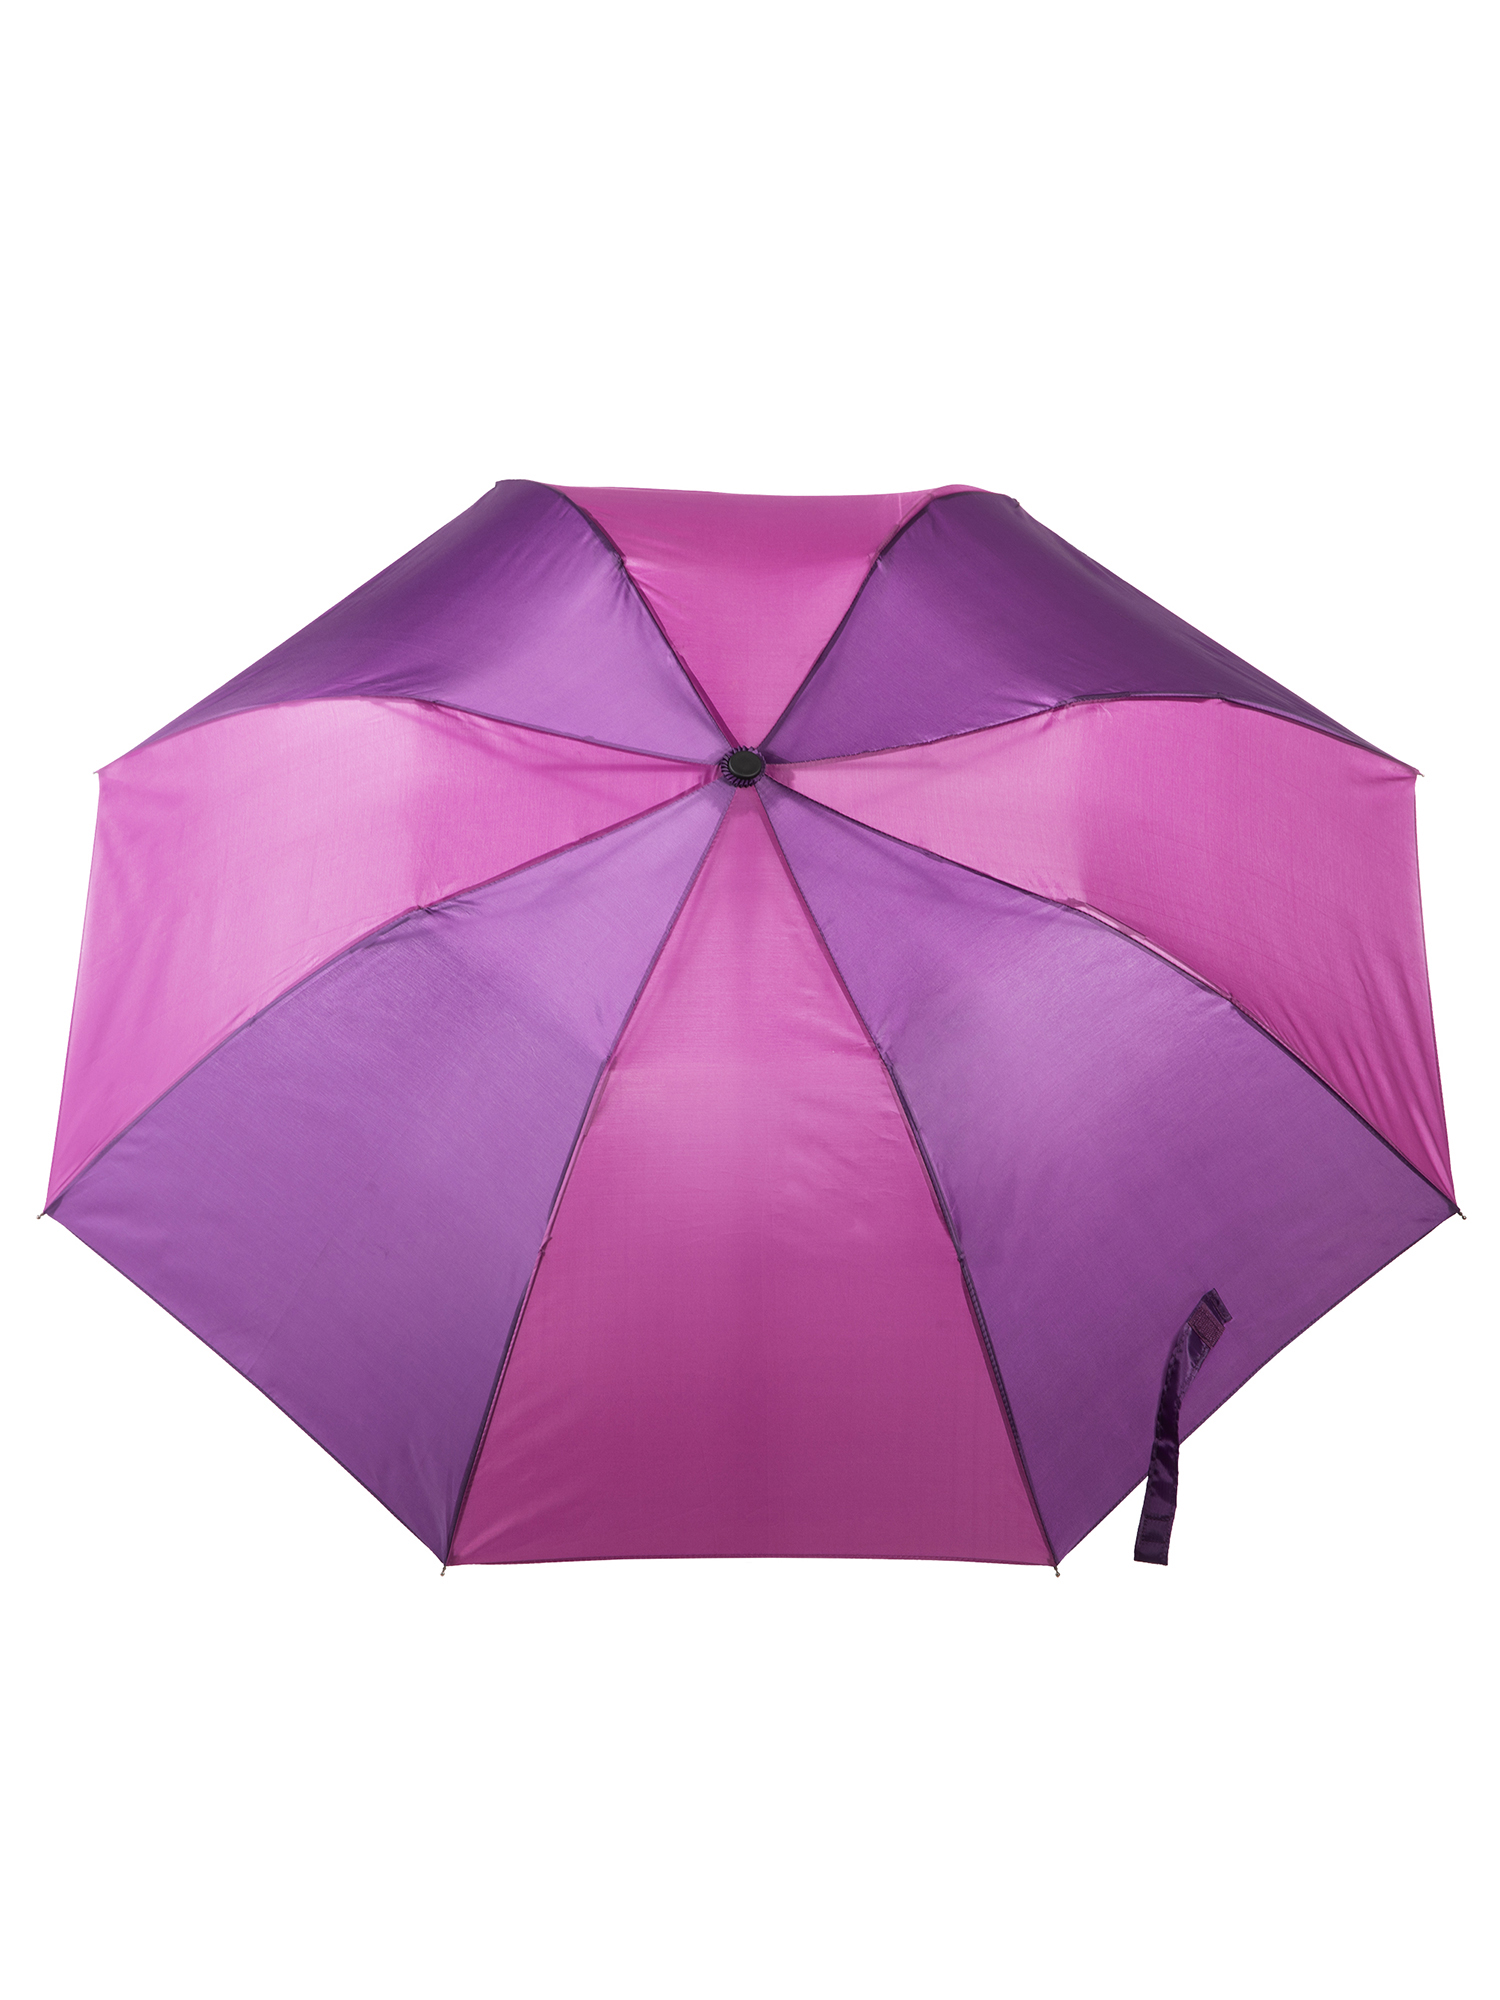 Totes Recycled Canopy Auto Open Rain Umbrella Purple Multi - image 2 of 3